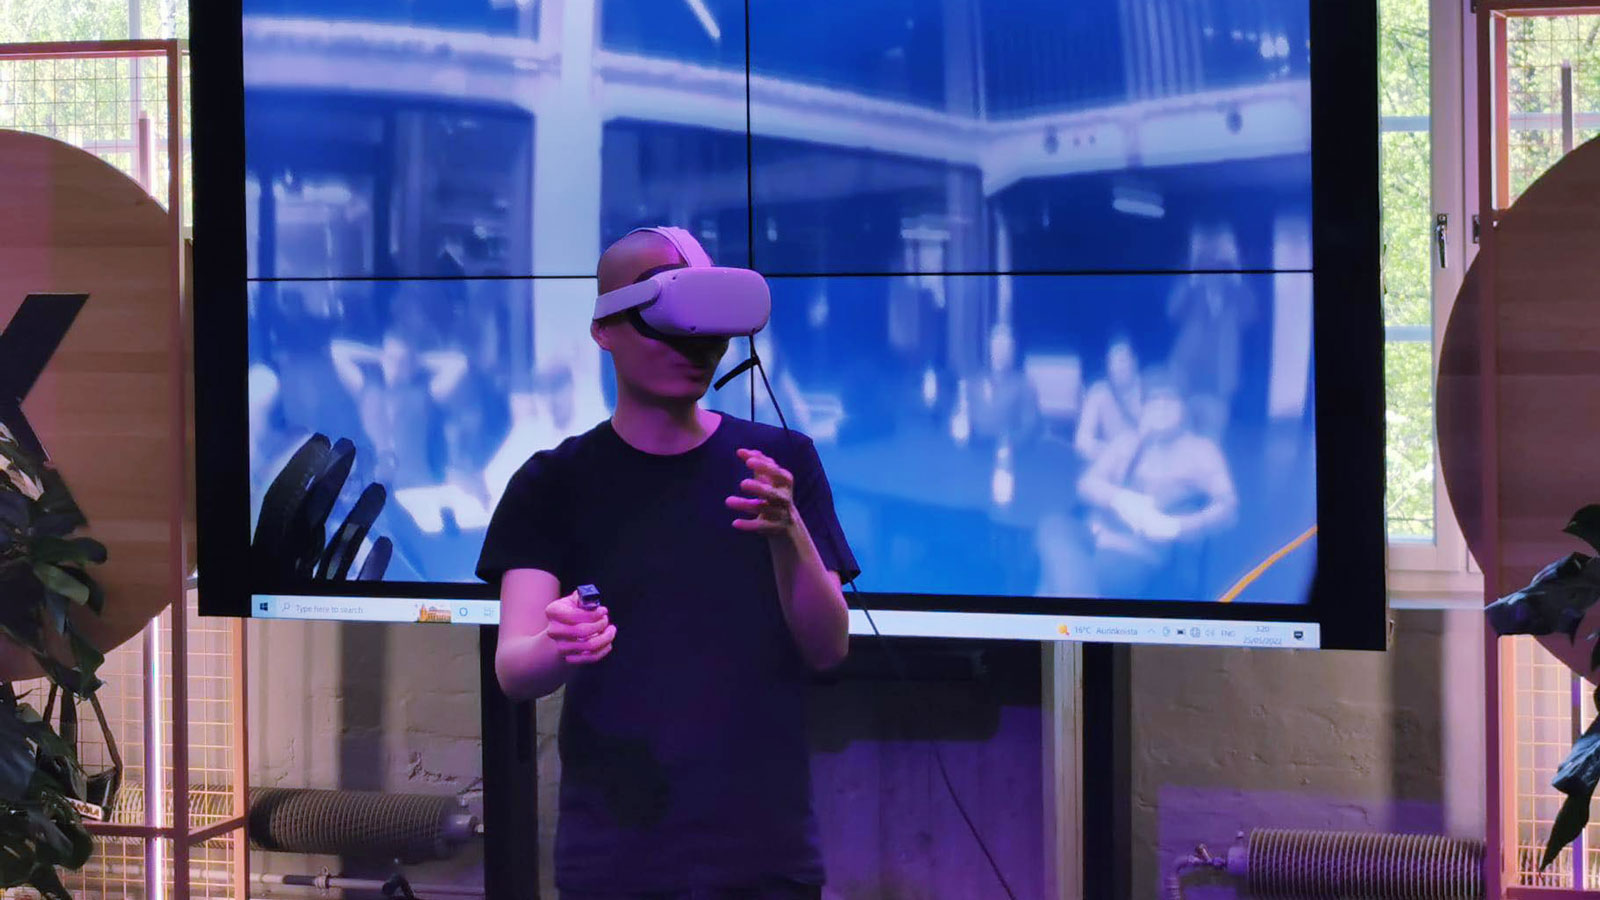 Atelier team member in a VR headset